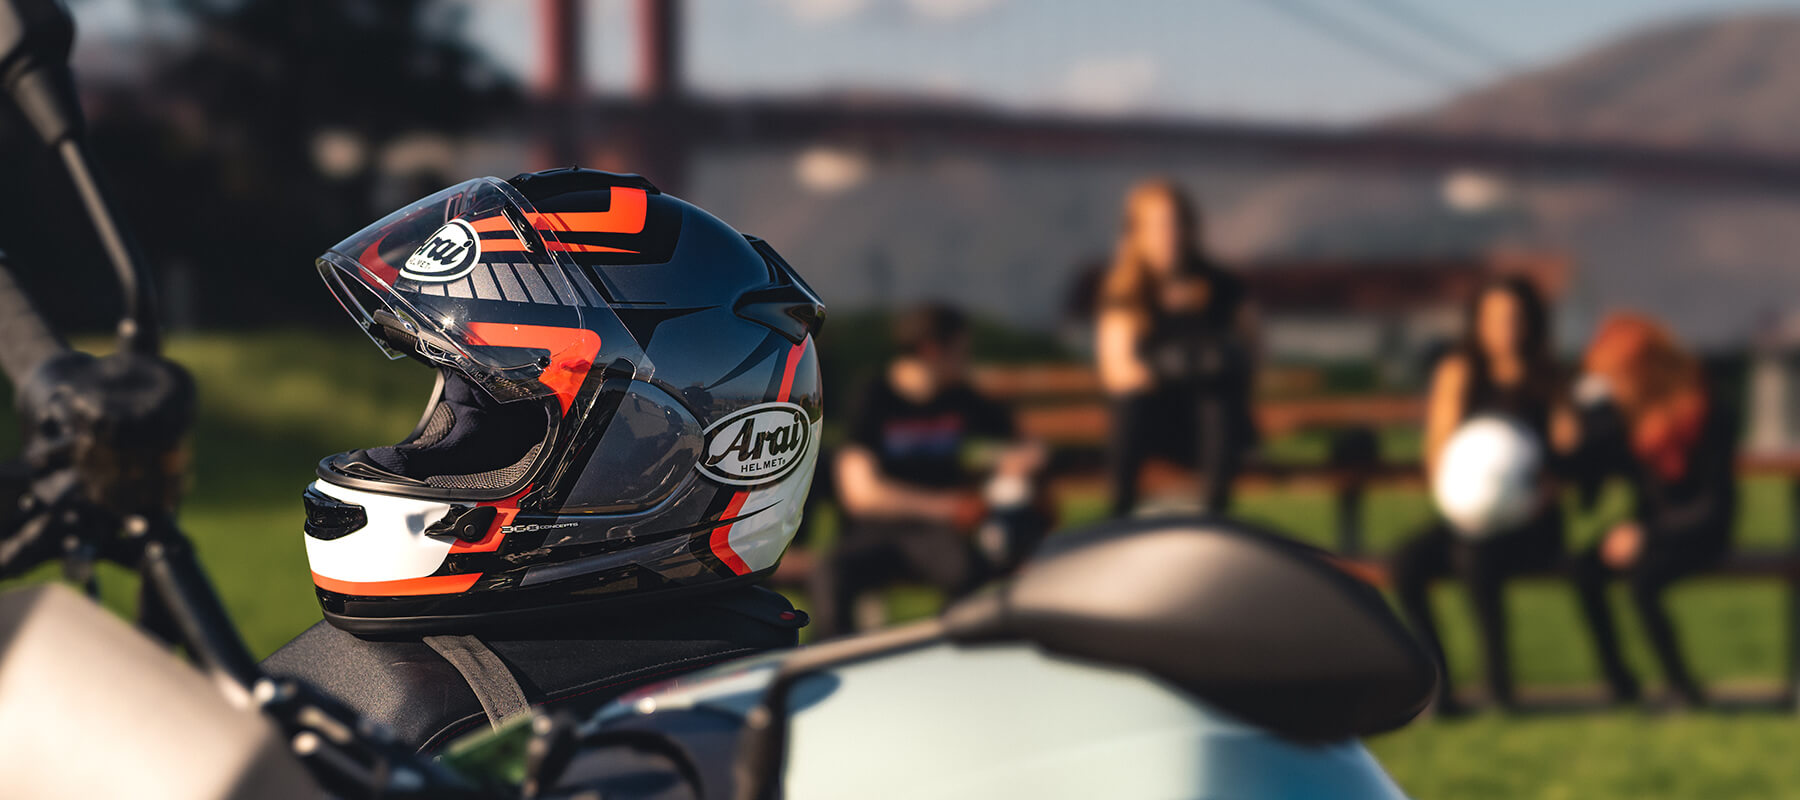 Arai motorcycle helmets for sale in San Francisco